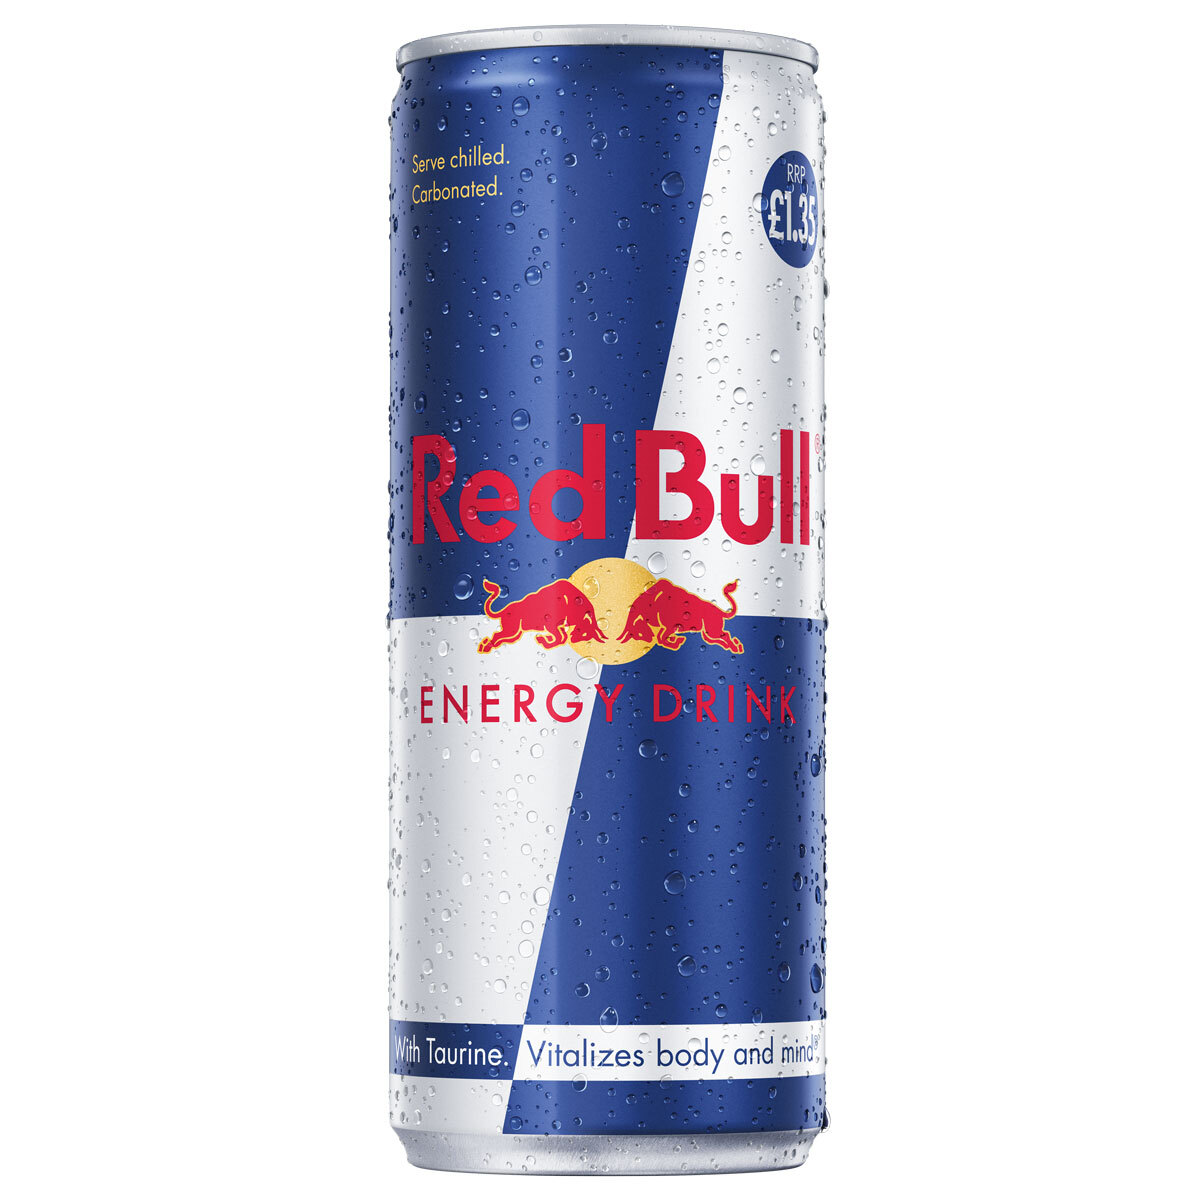 Red Bull PMP £1.35, 24 x 250ml